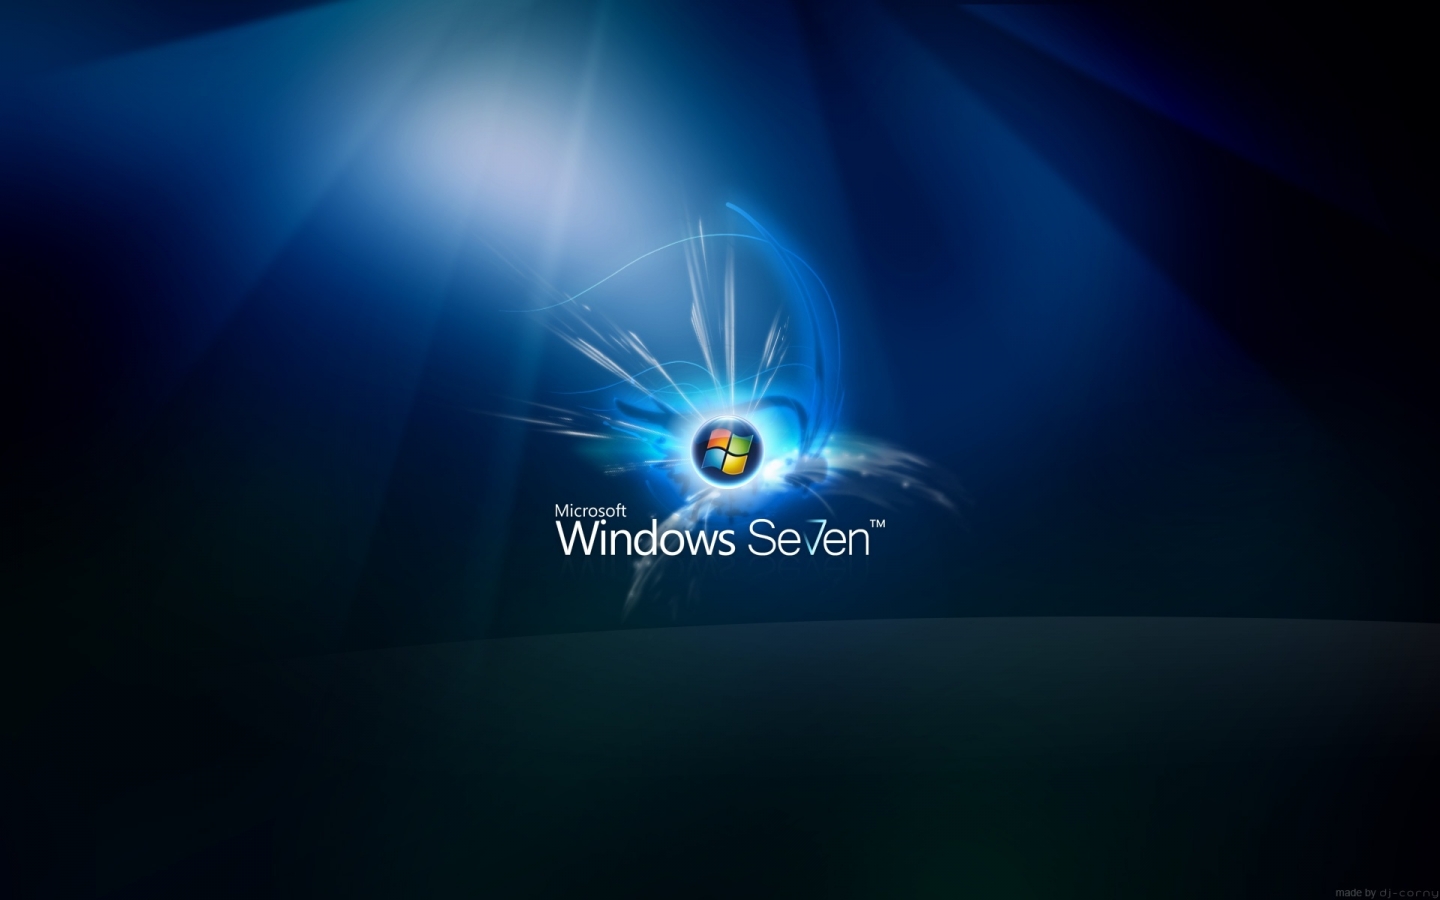 Windows Seven Glow for 1440 x 900 widescreen resolution